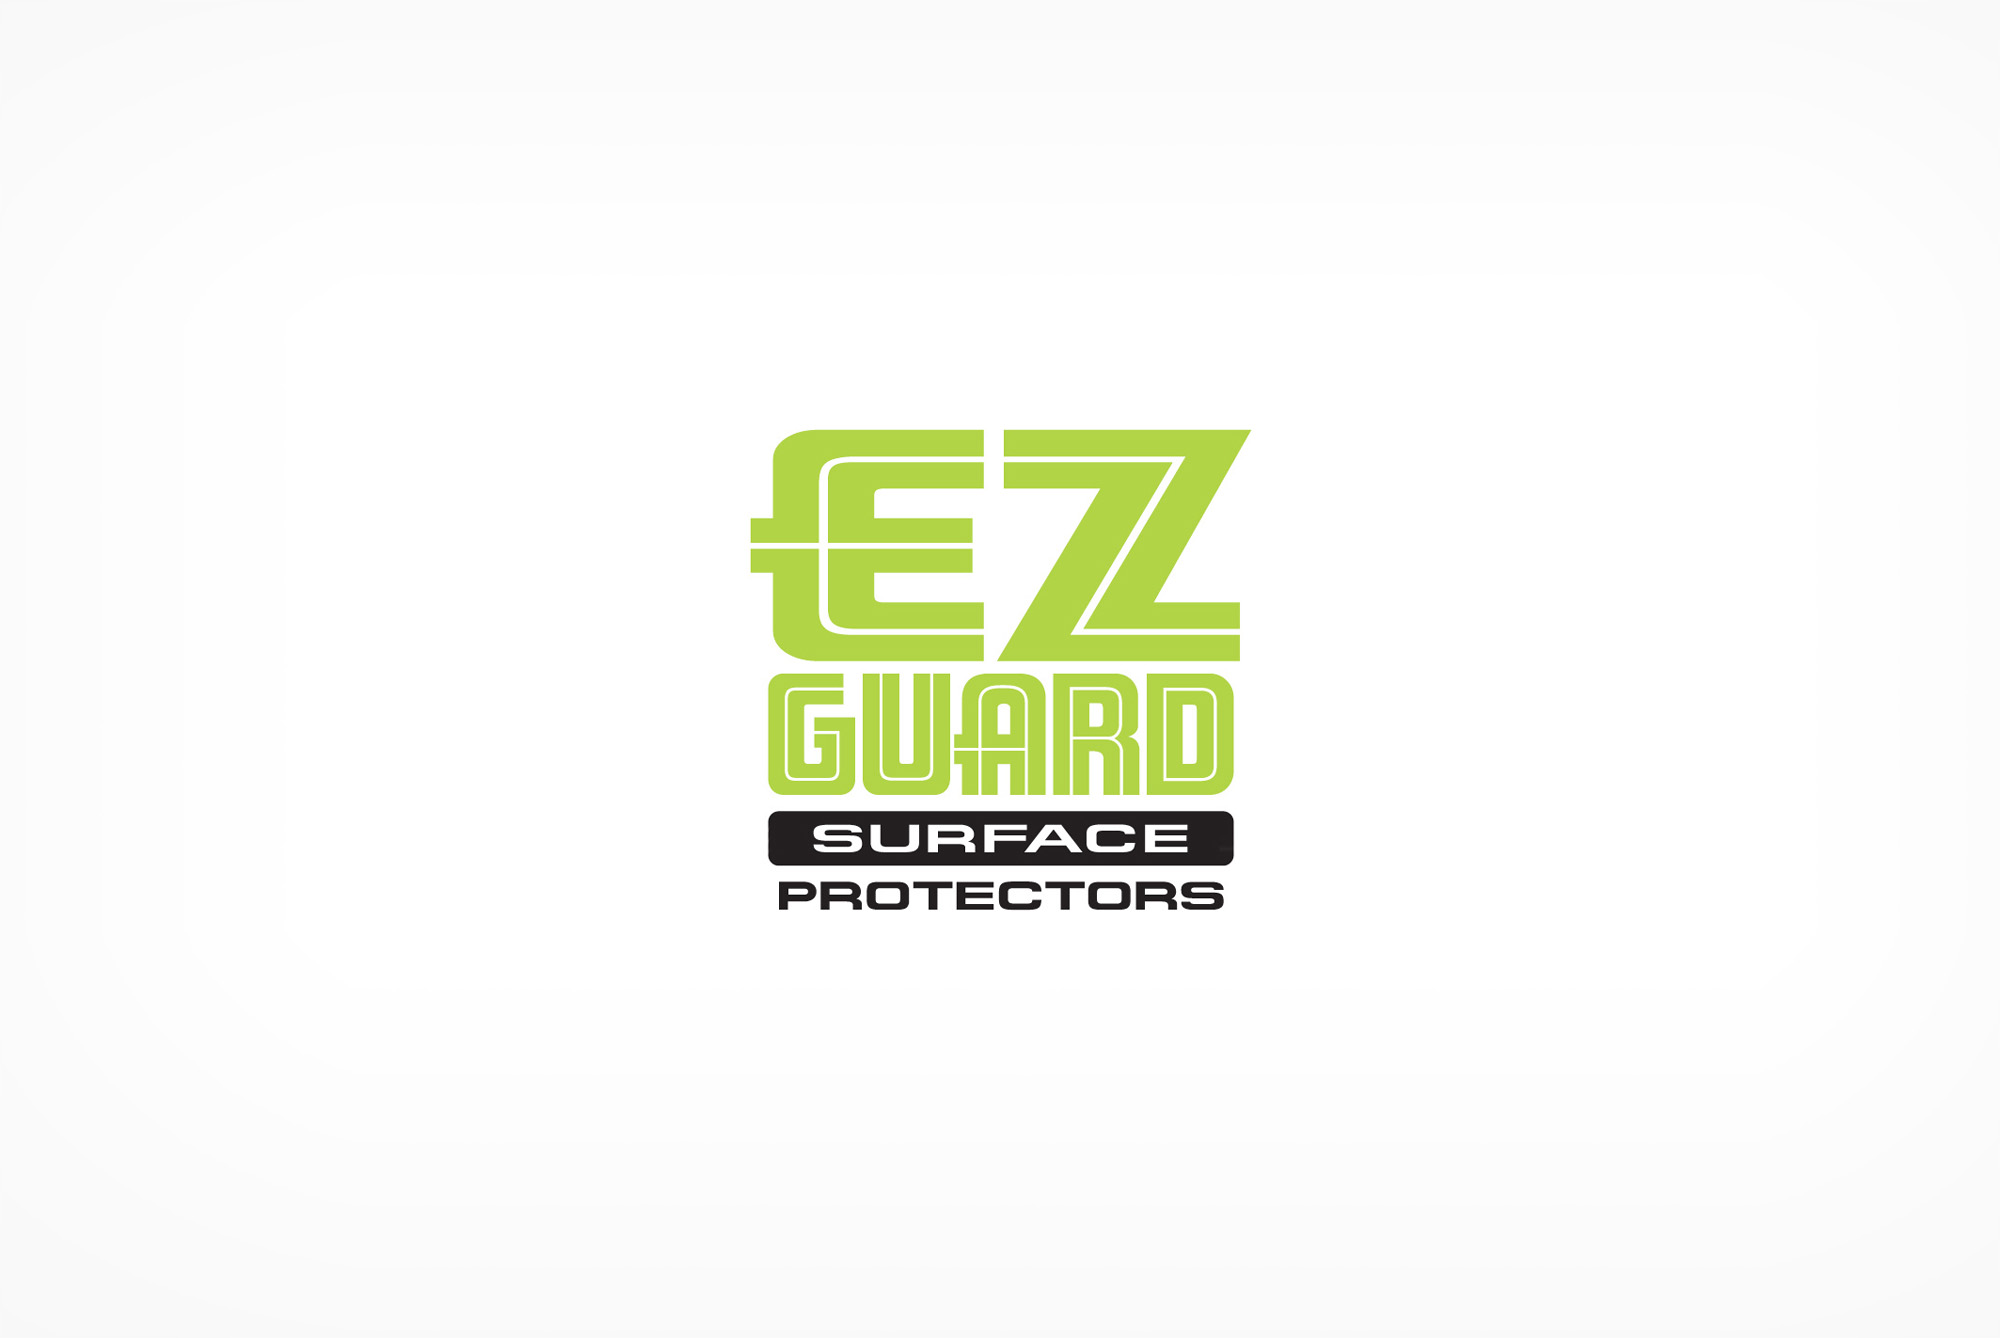 EZ Guard Surface Protectors logo.